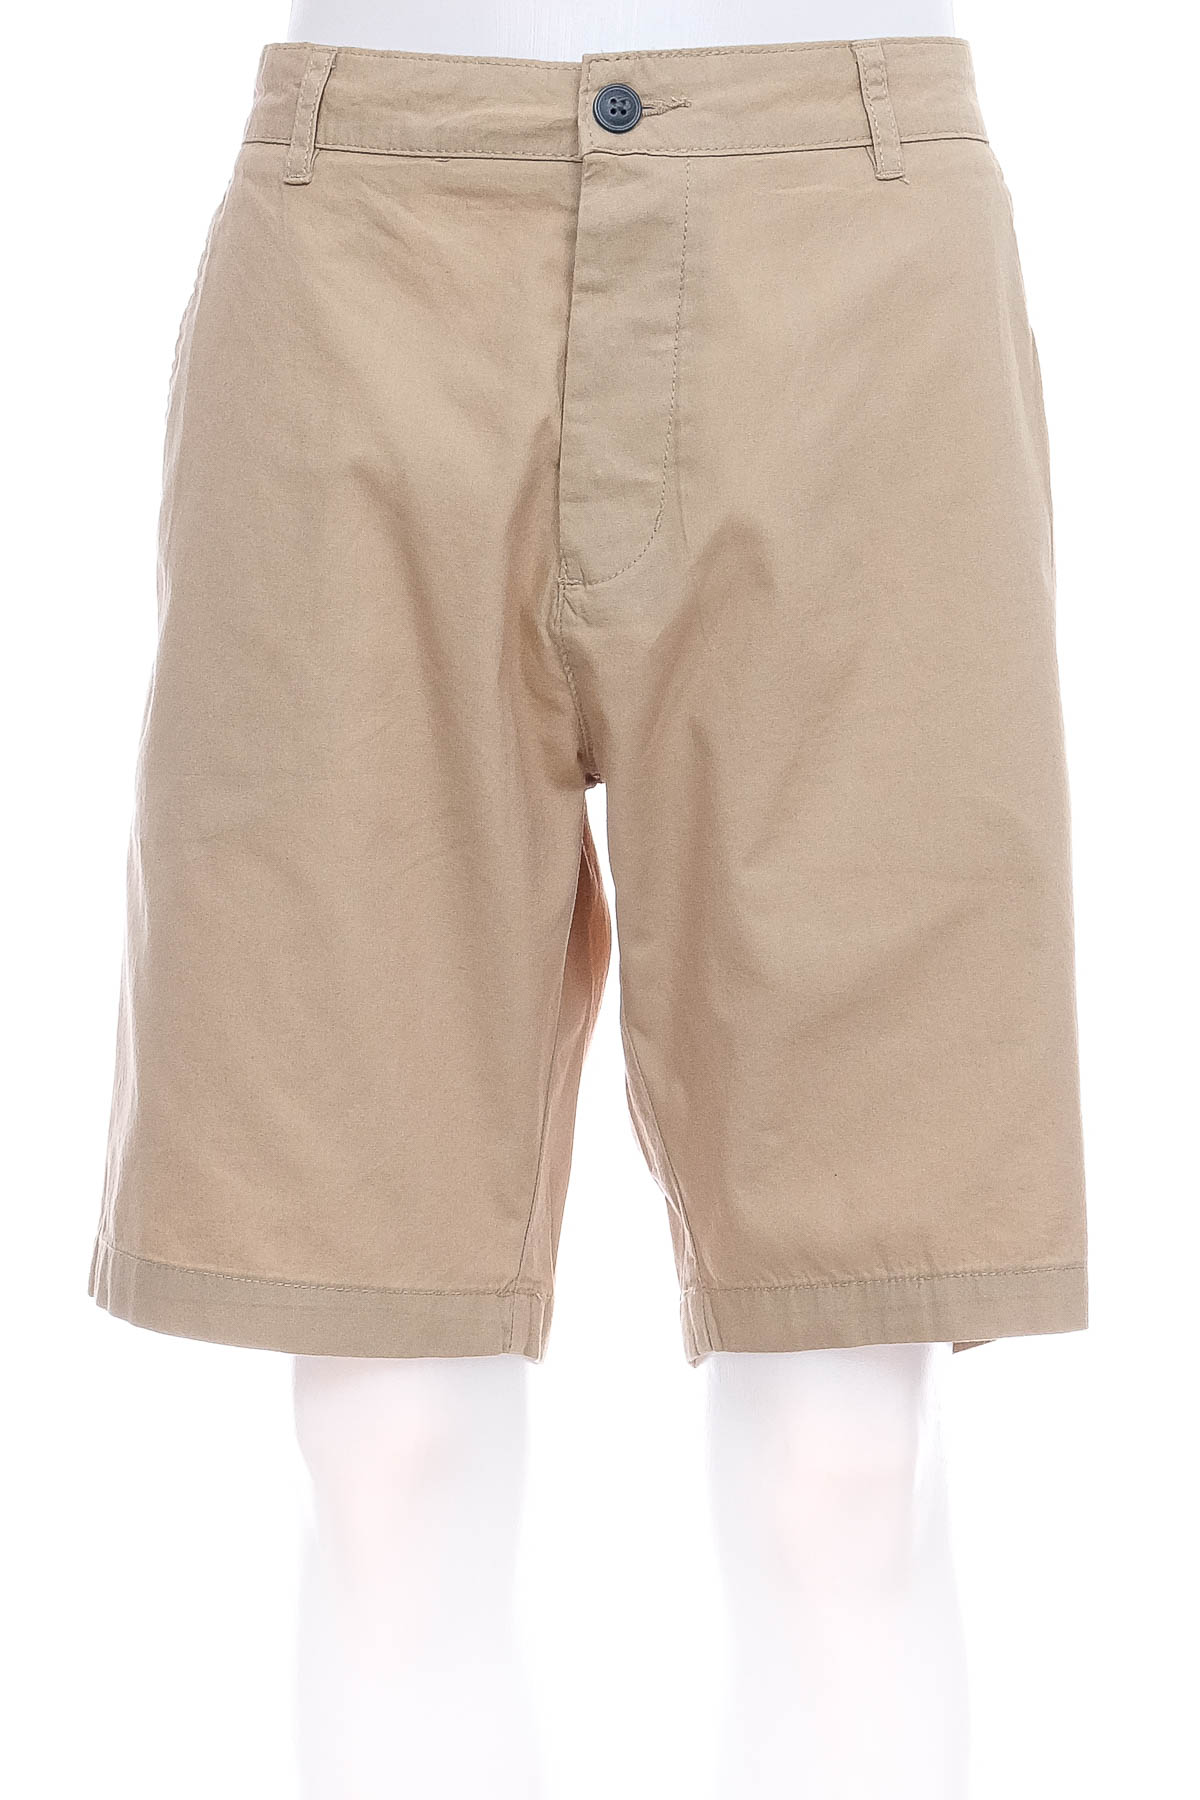 Men's shorts - DIVIDED - 0